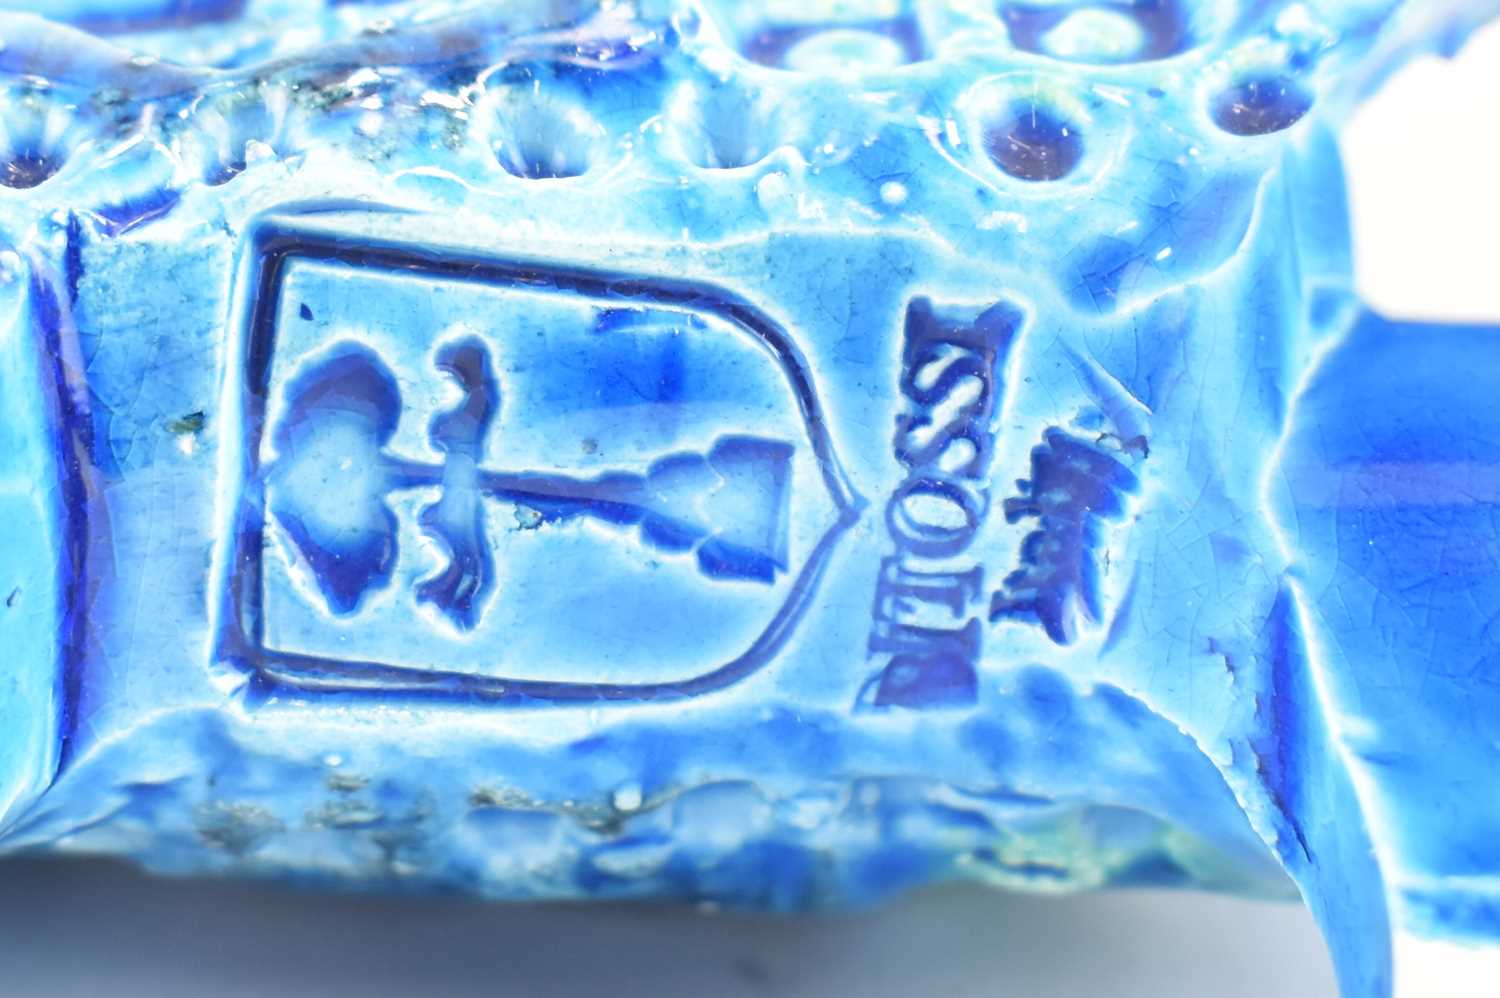 ALDO LONDI FOR BITOSSI; an Italian ceramic elephant decorated with the Rimini blue glaze, with - Image 4 of 4